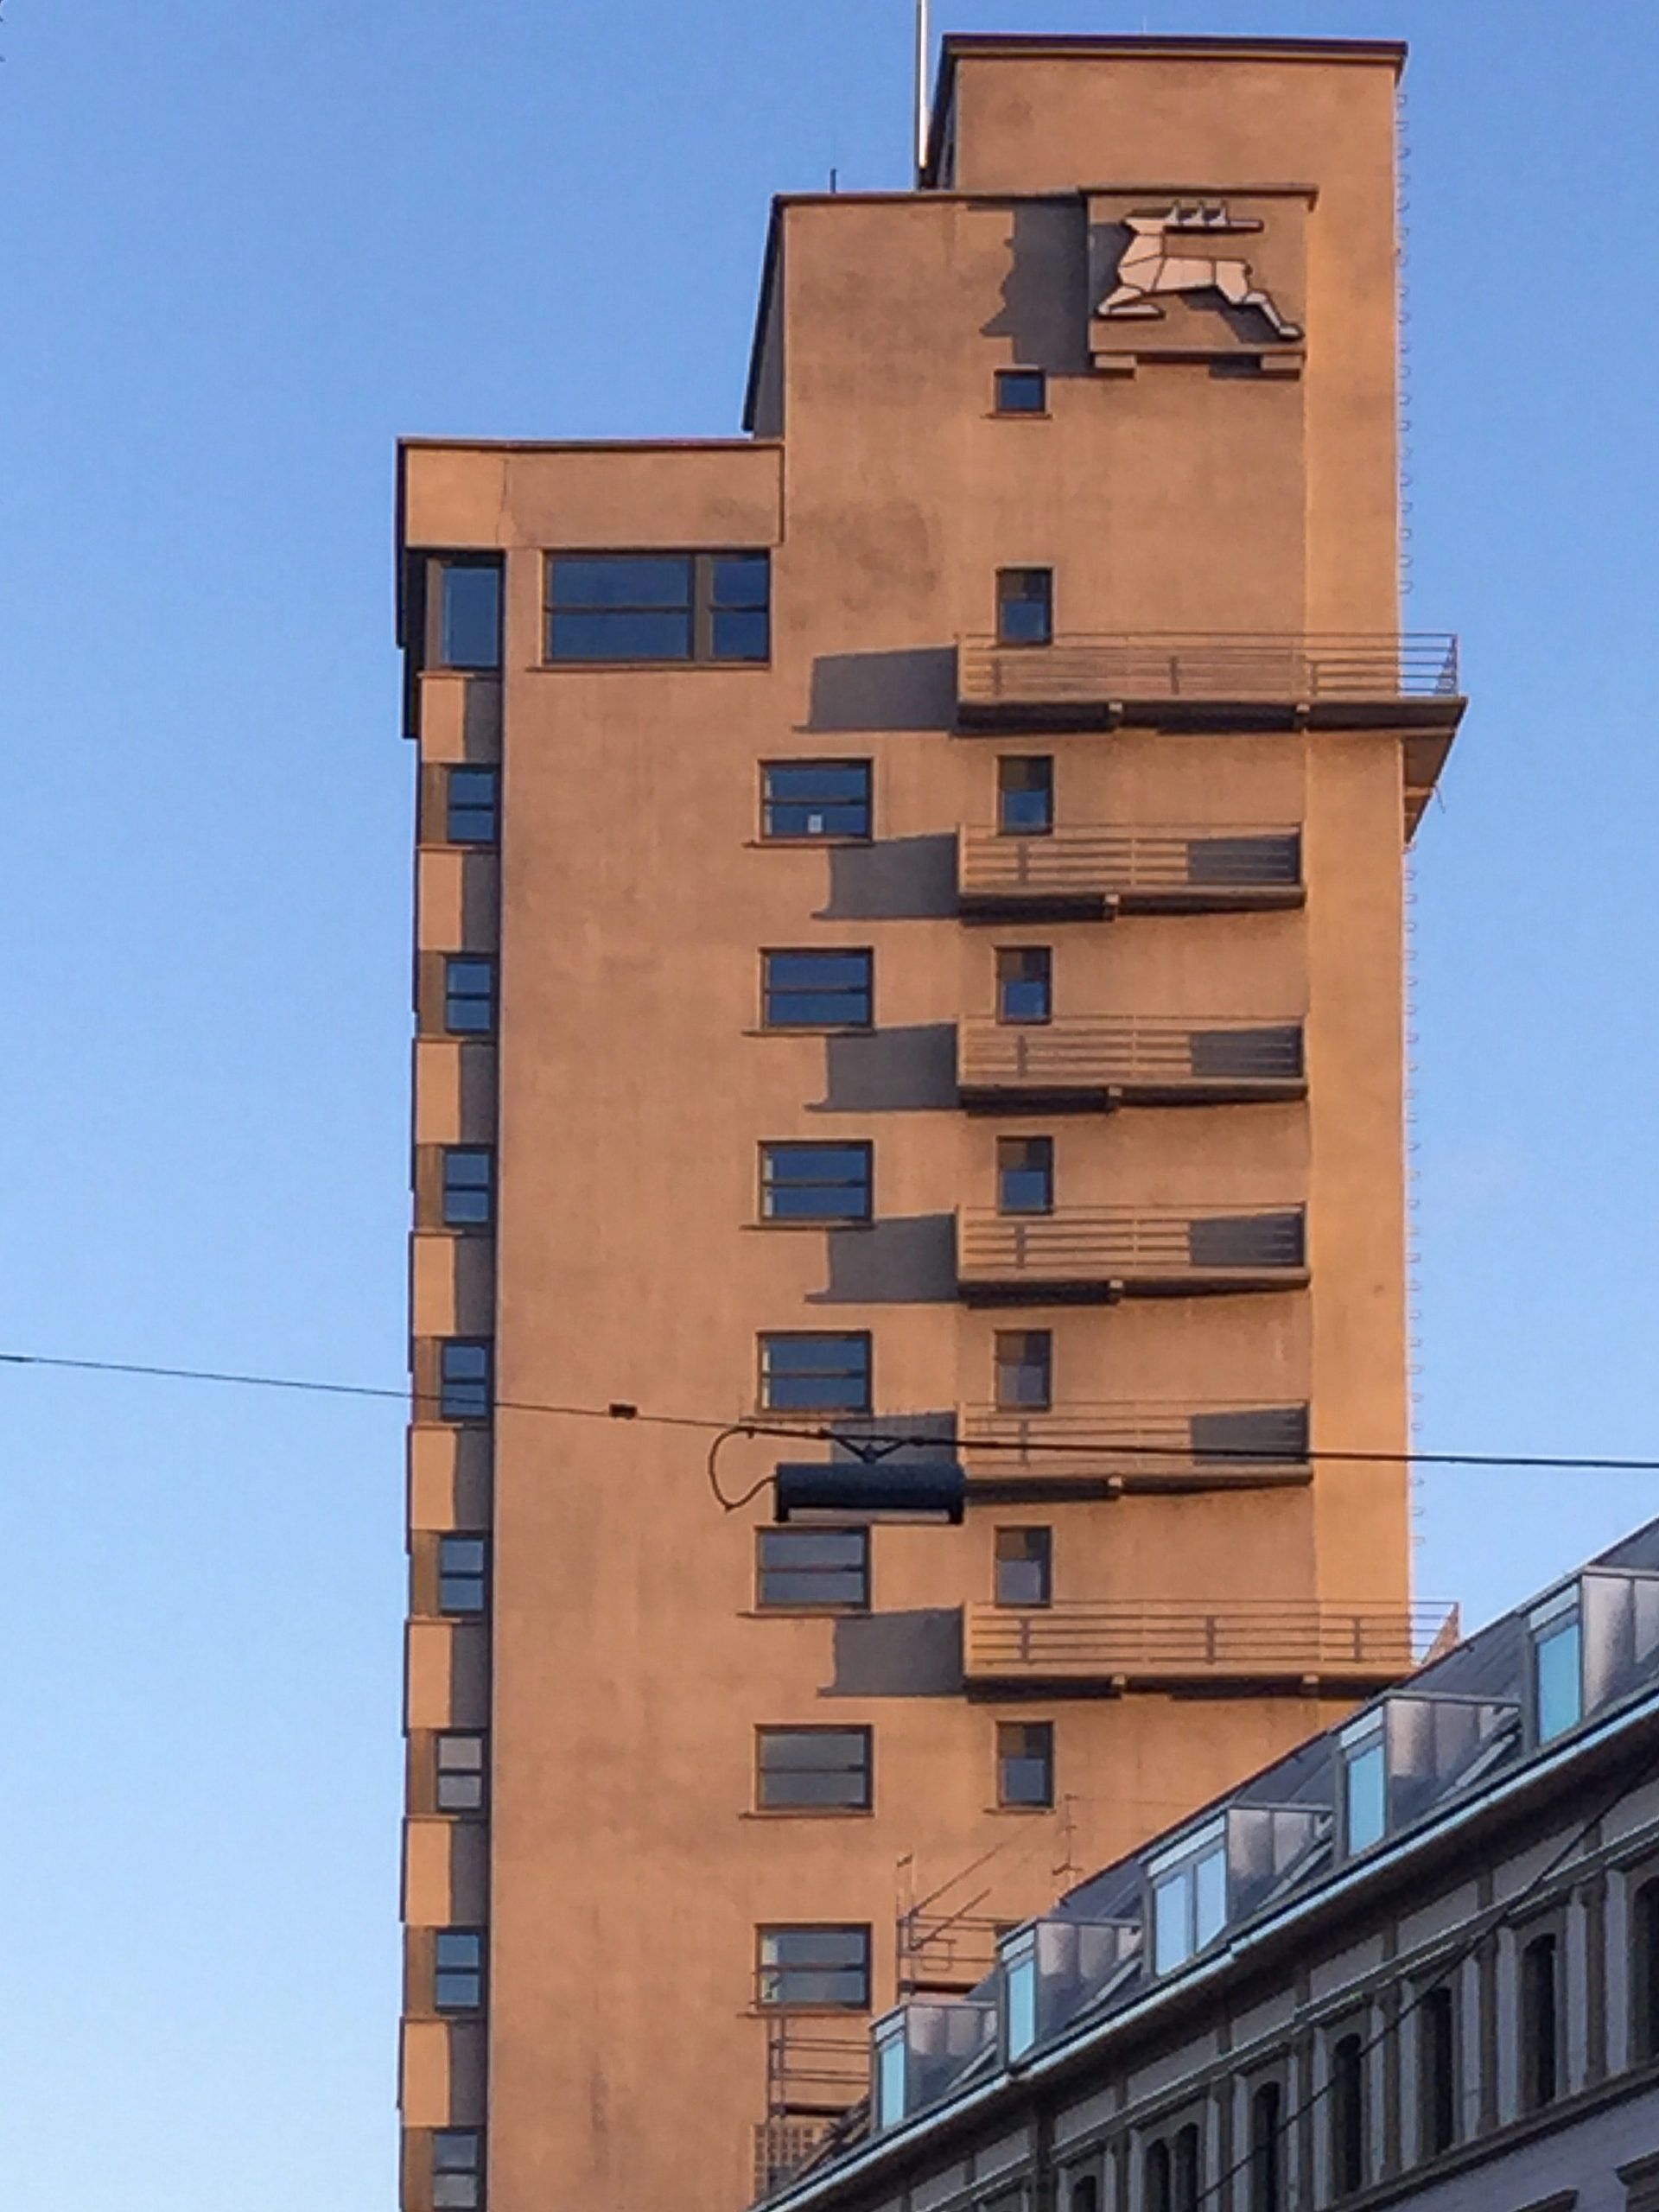 Tagblatt-Turm, 1924-1928. Architect: Ernst Otto Oßwald. Photo: Daniela Christmann